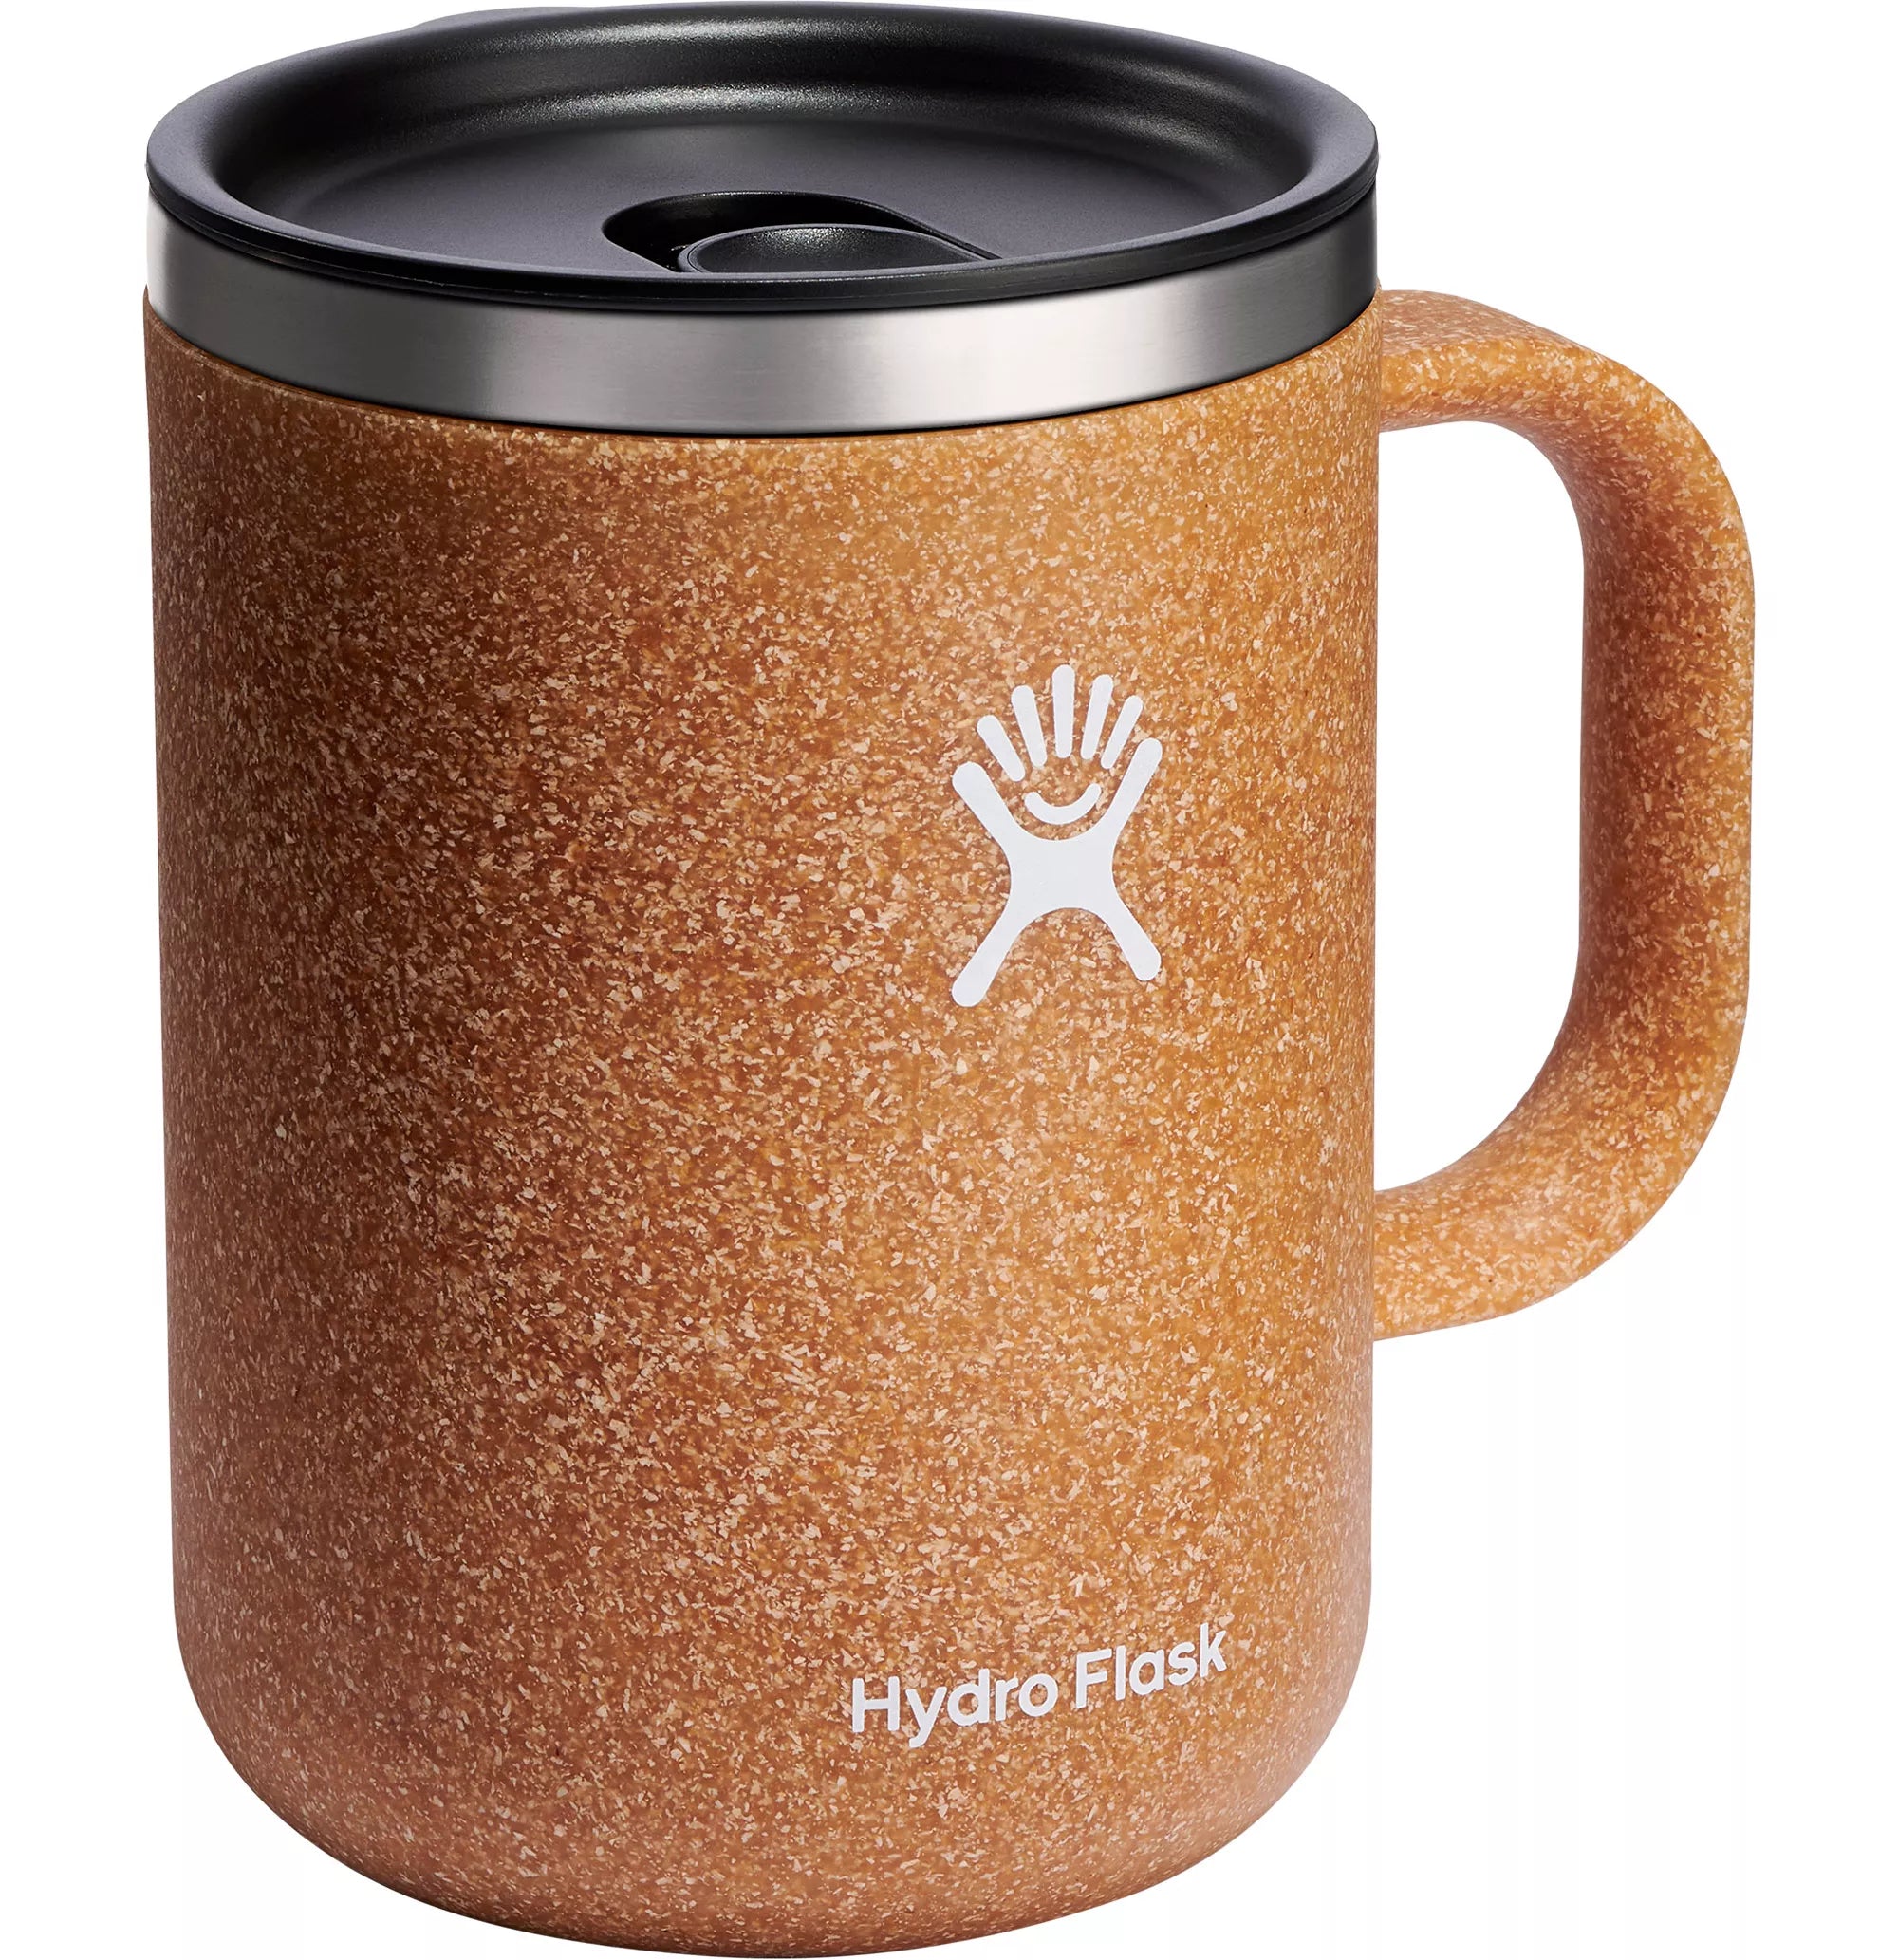 Hydro Flask Coffee Mug